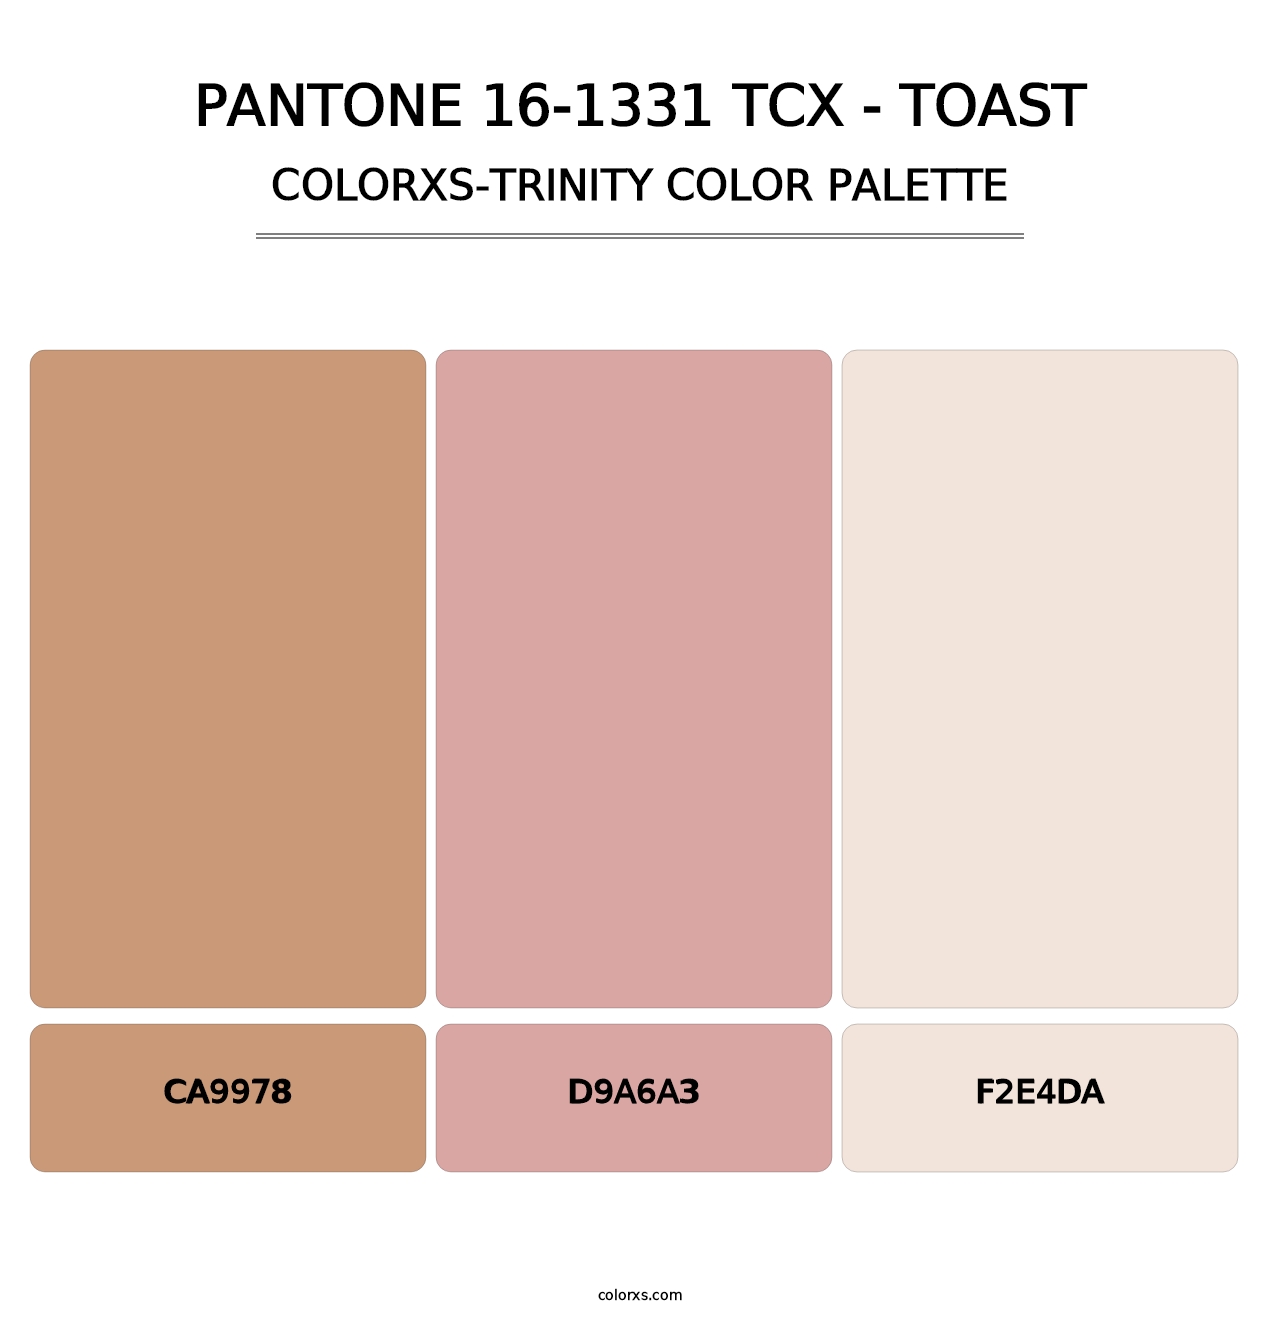 PANTONE 16-1331 TCX - Toast - Colorxs Trinity Palette